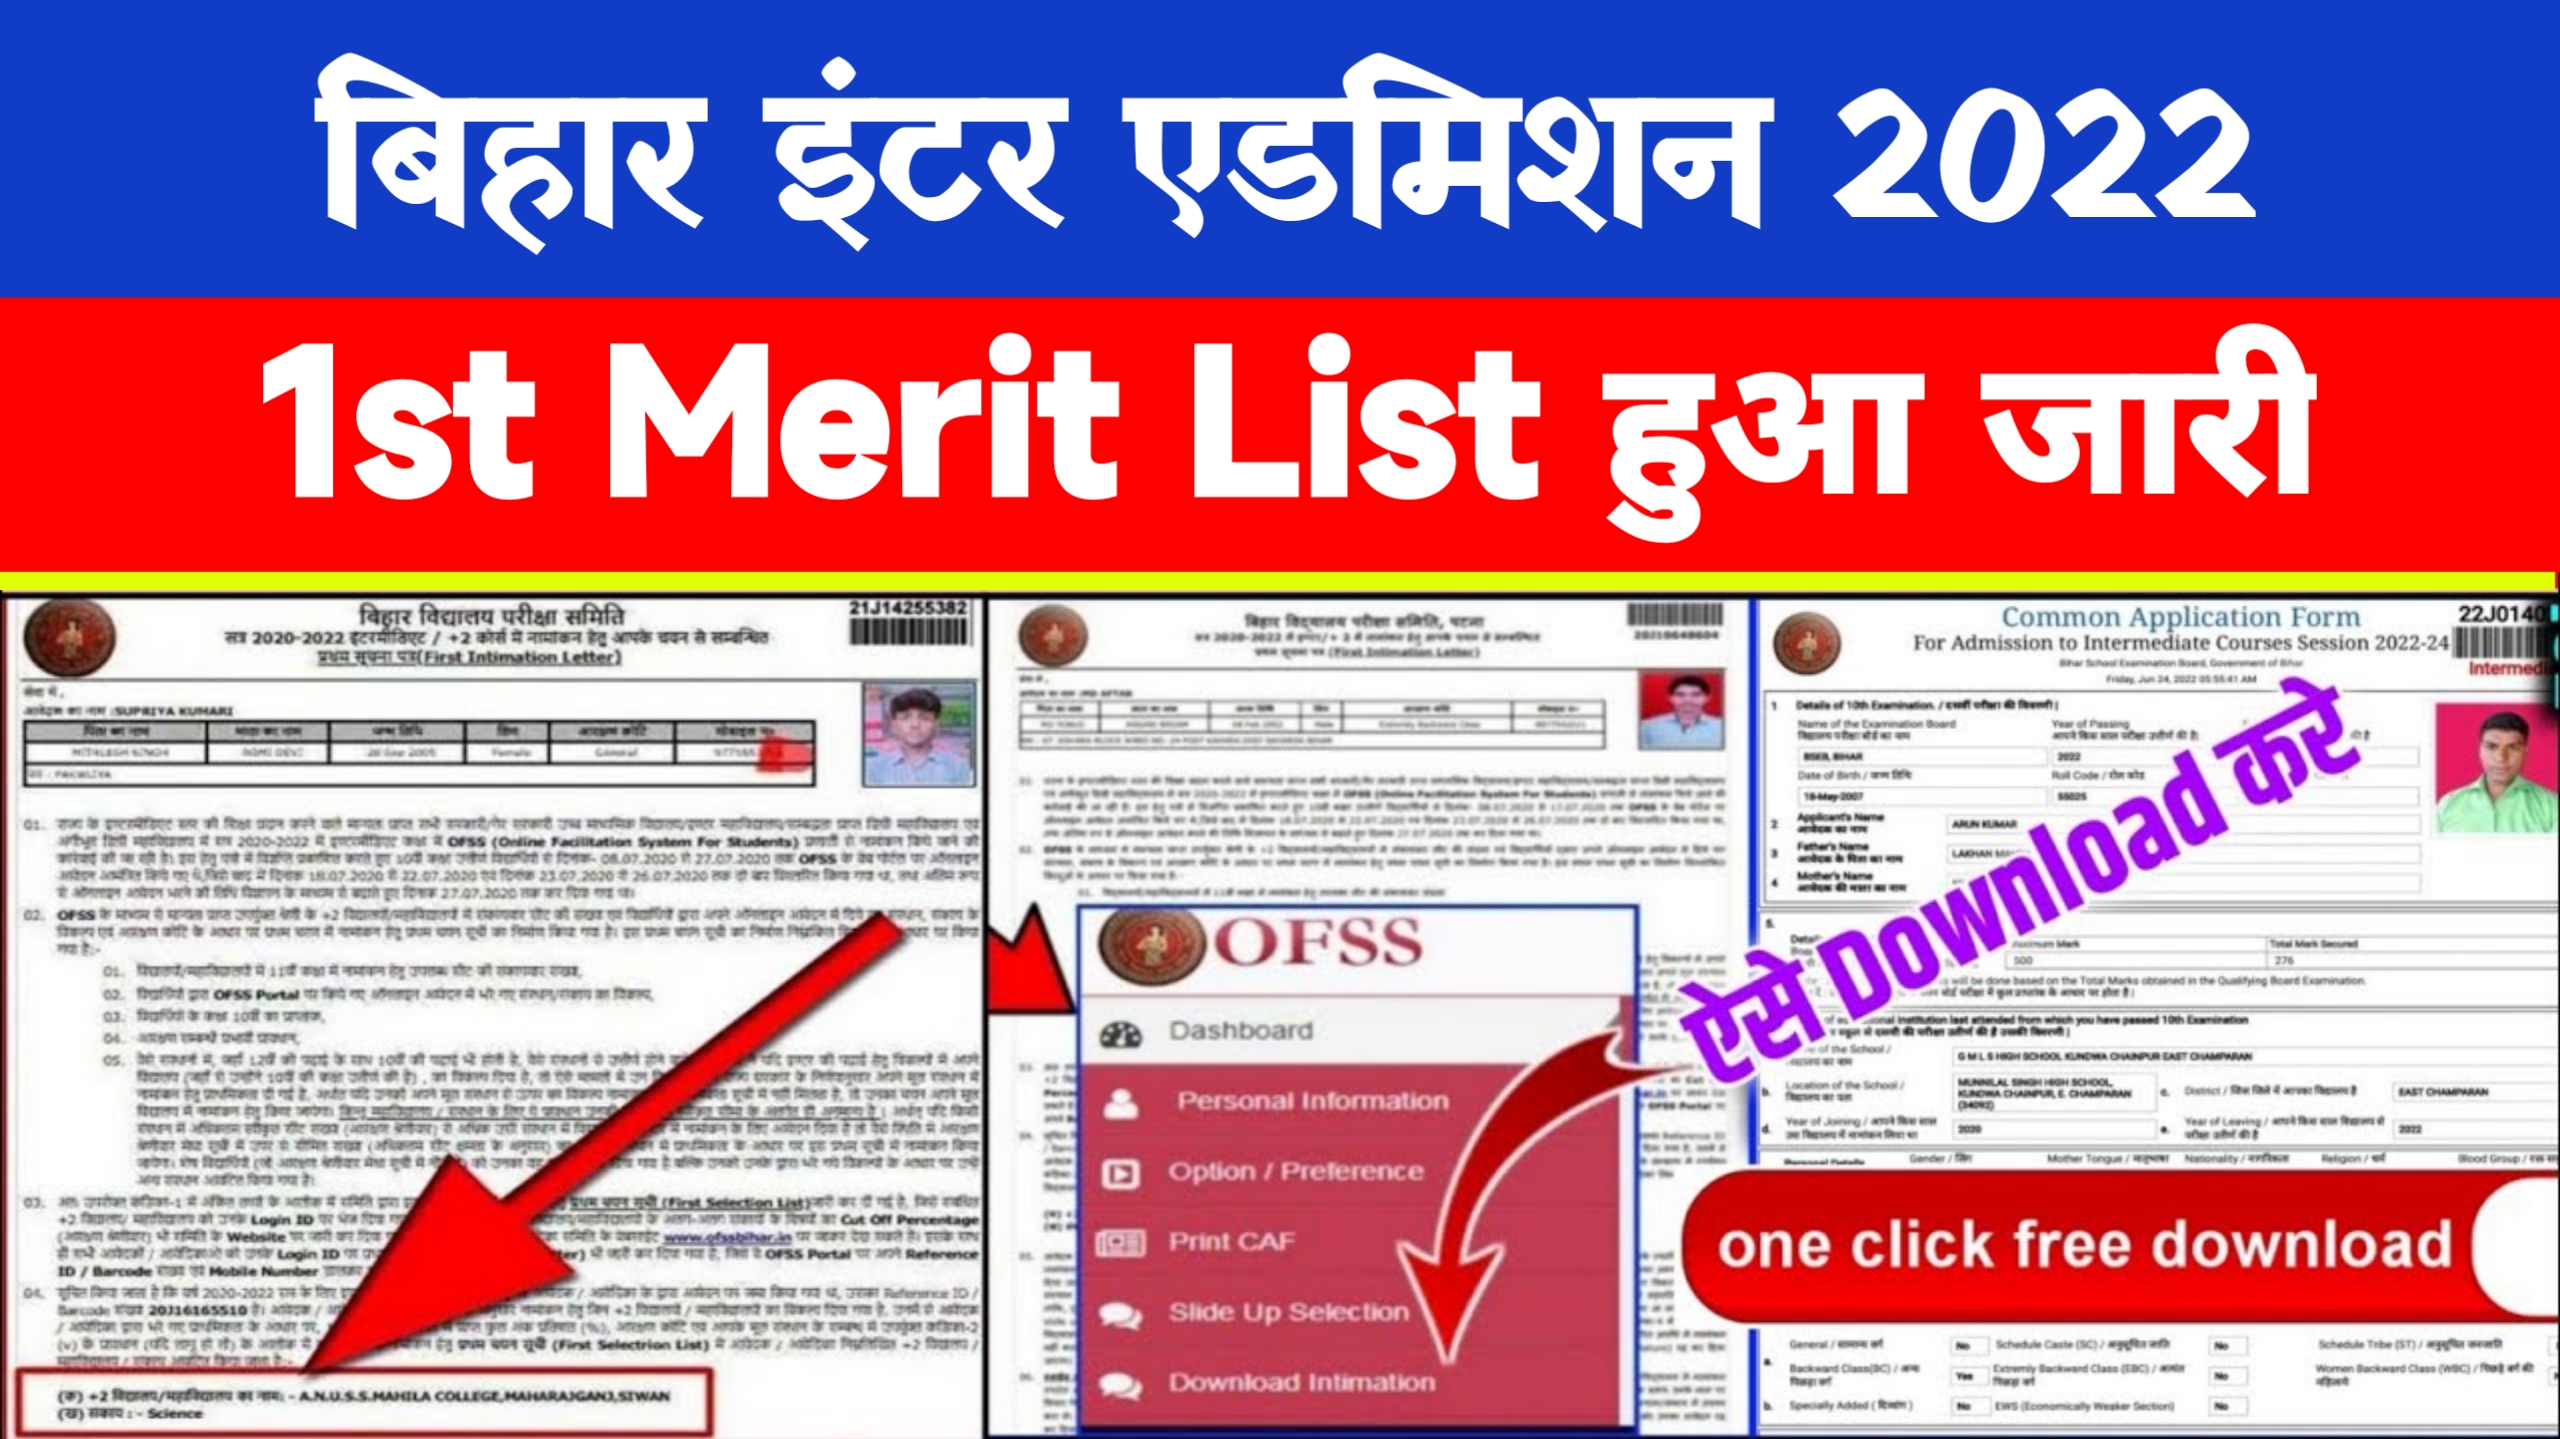 ofssbihar-in-bihar-board-11th-first-merit-list-2022-download-ofss-link